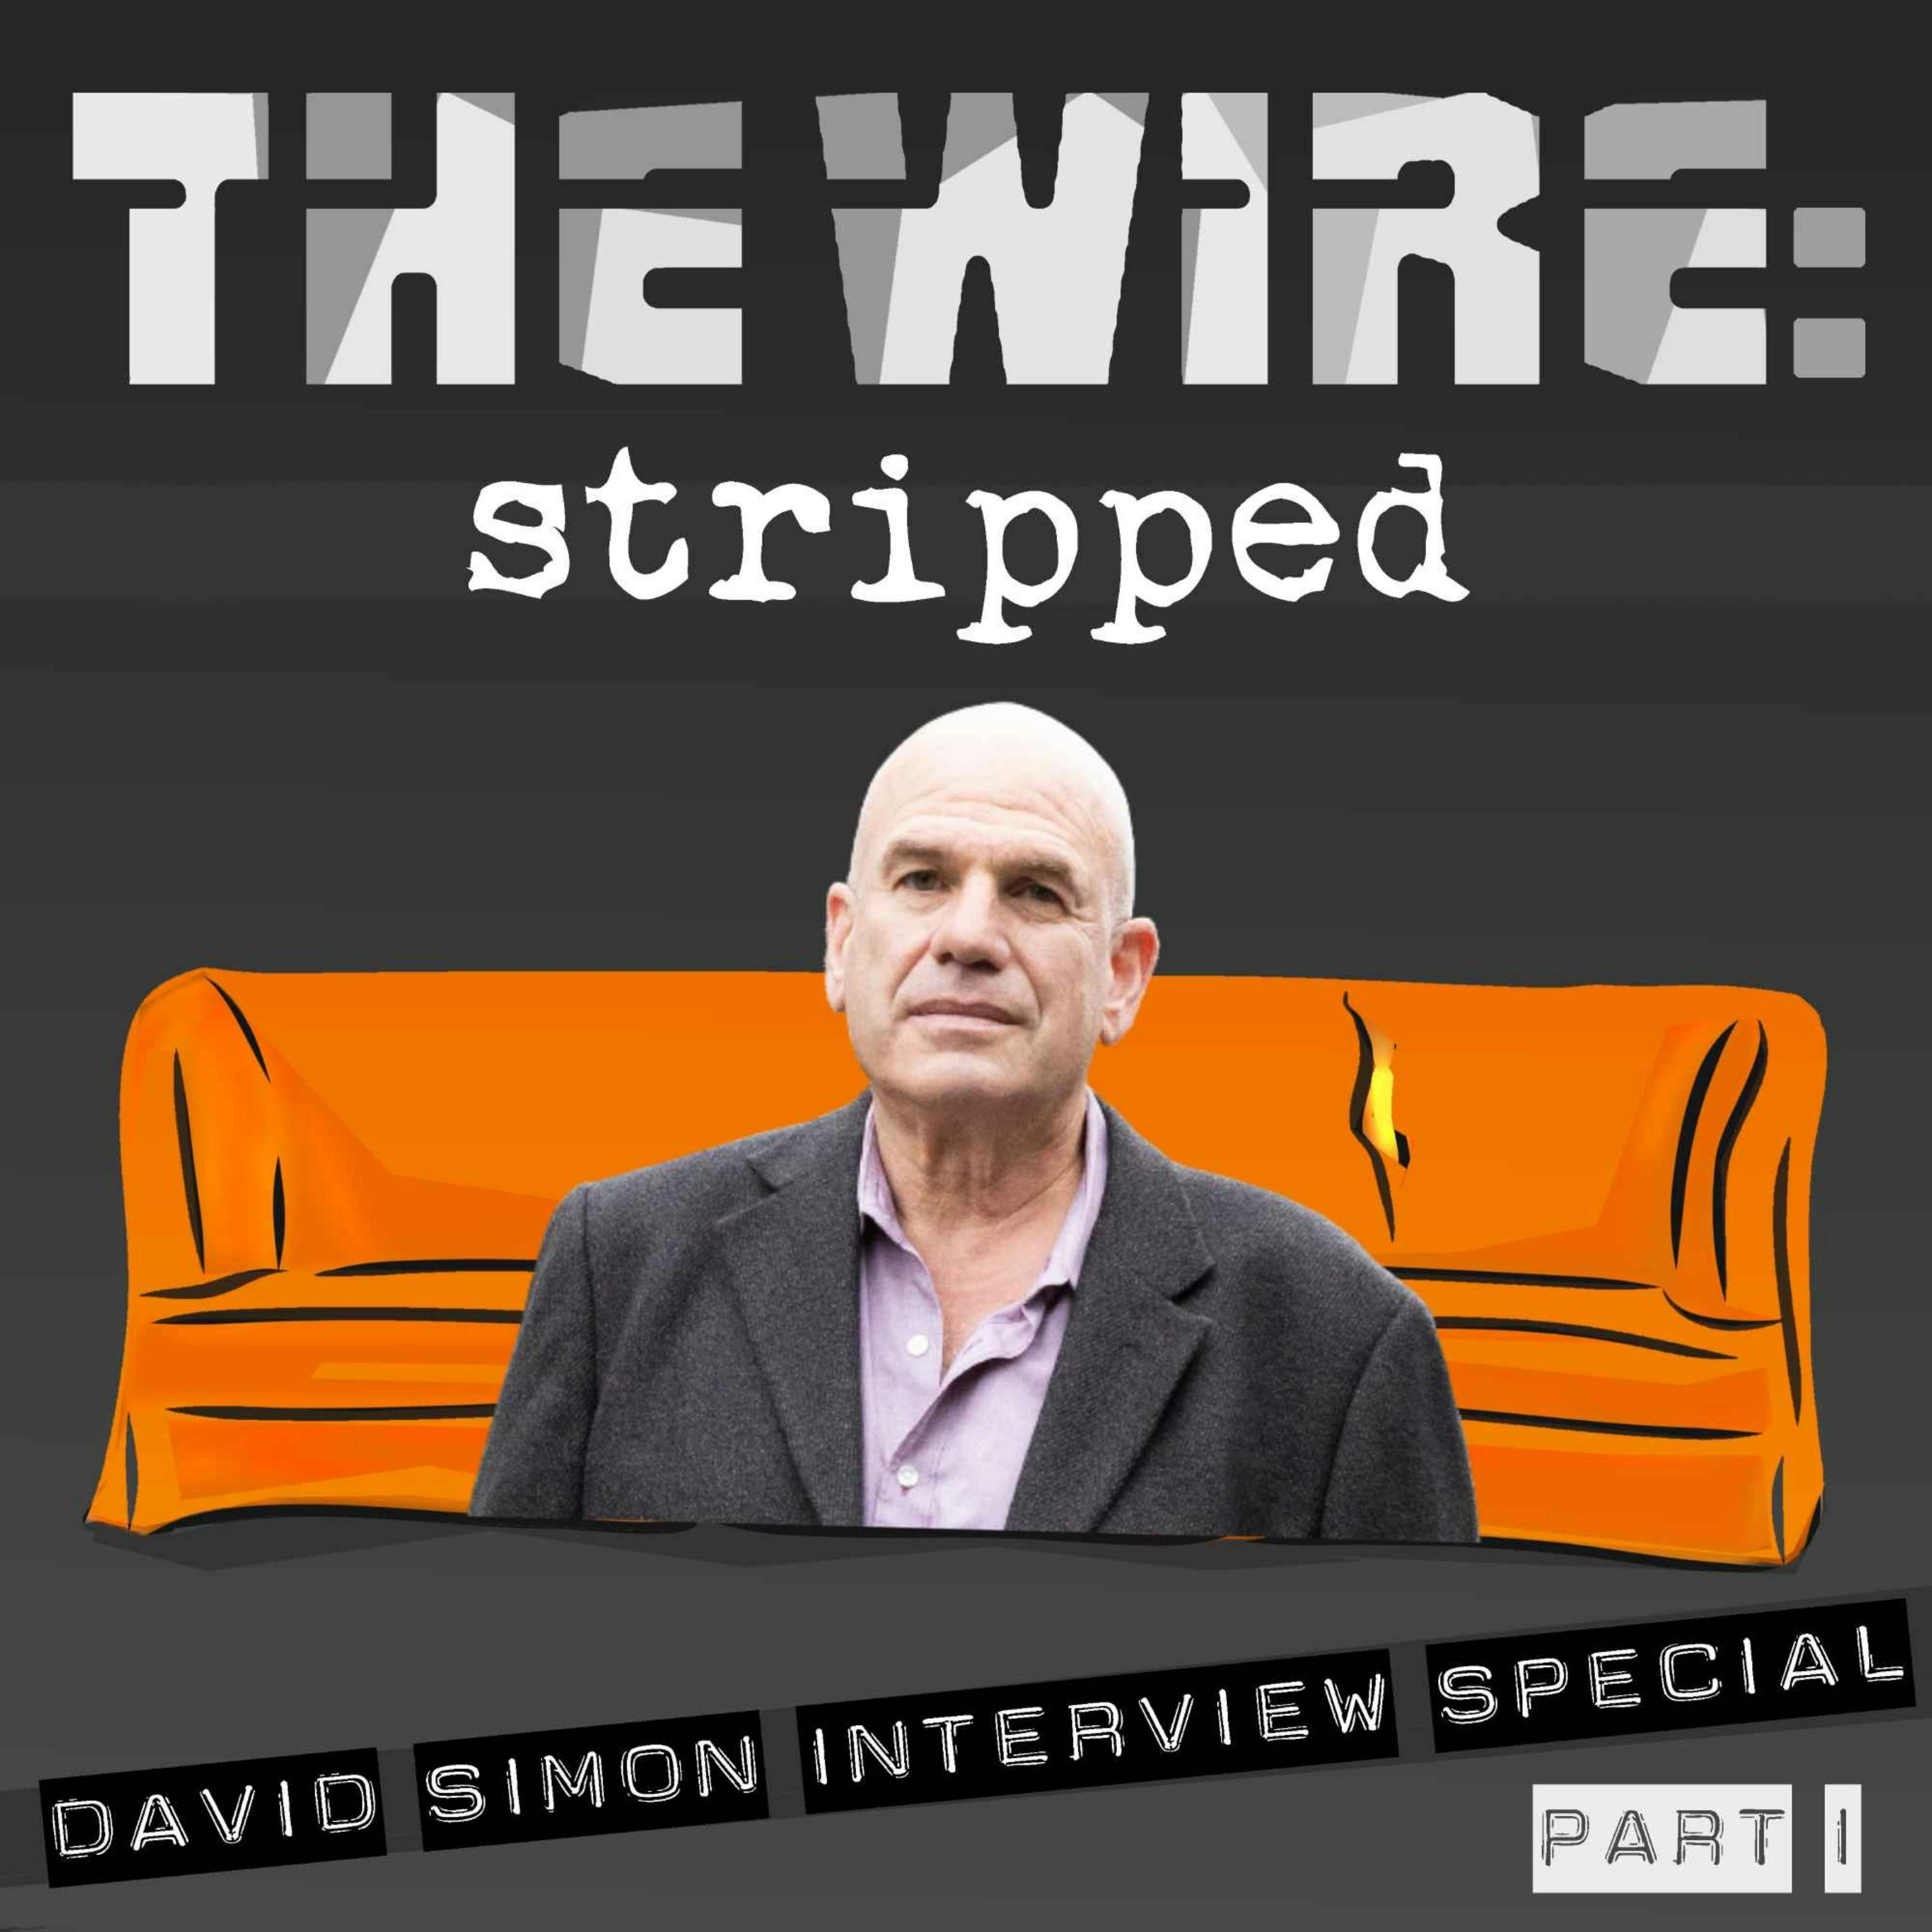 David Simon Interview Special: Part I